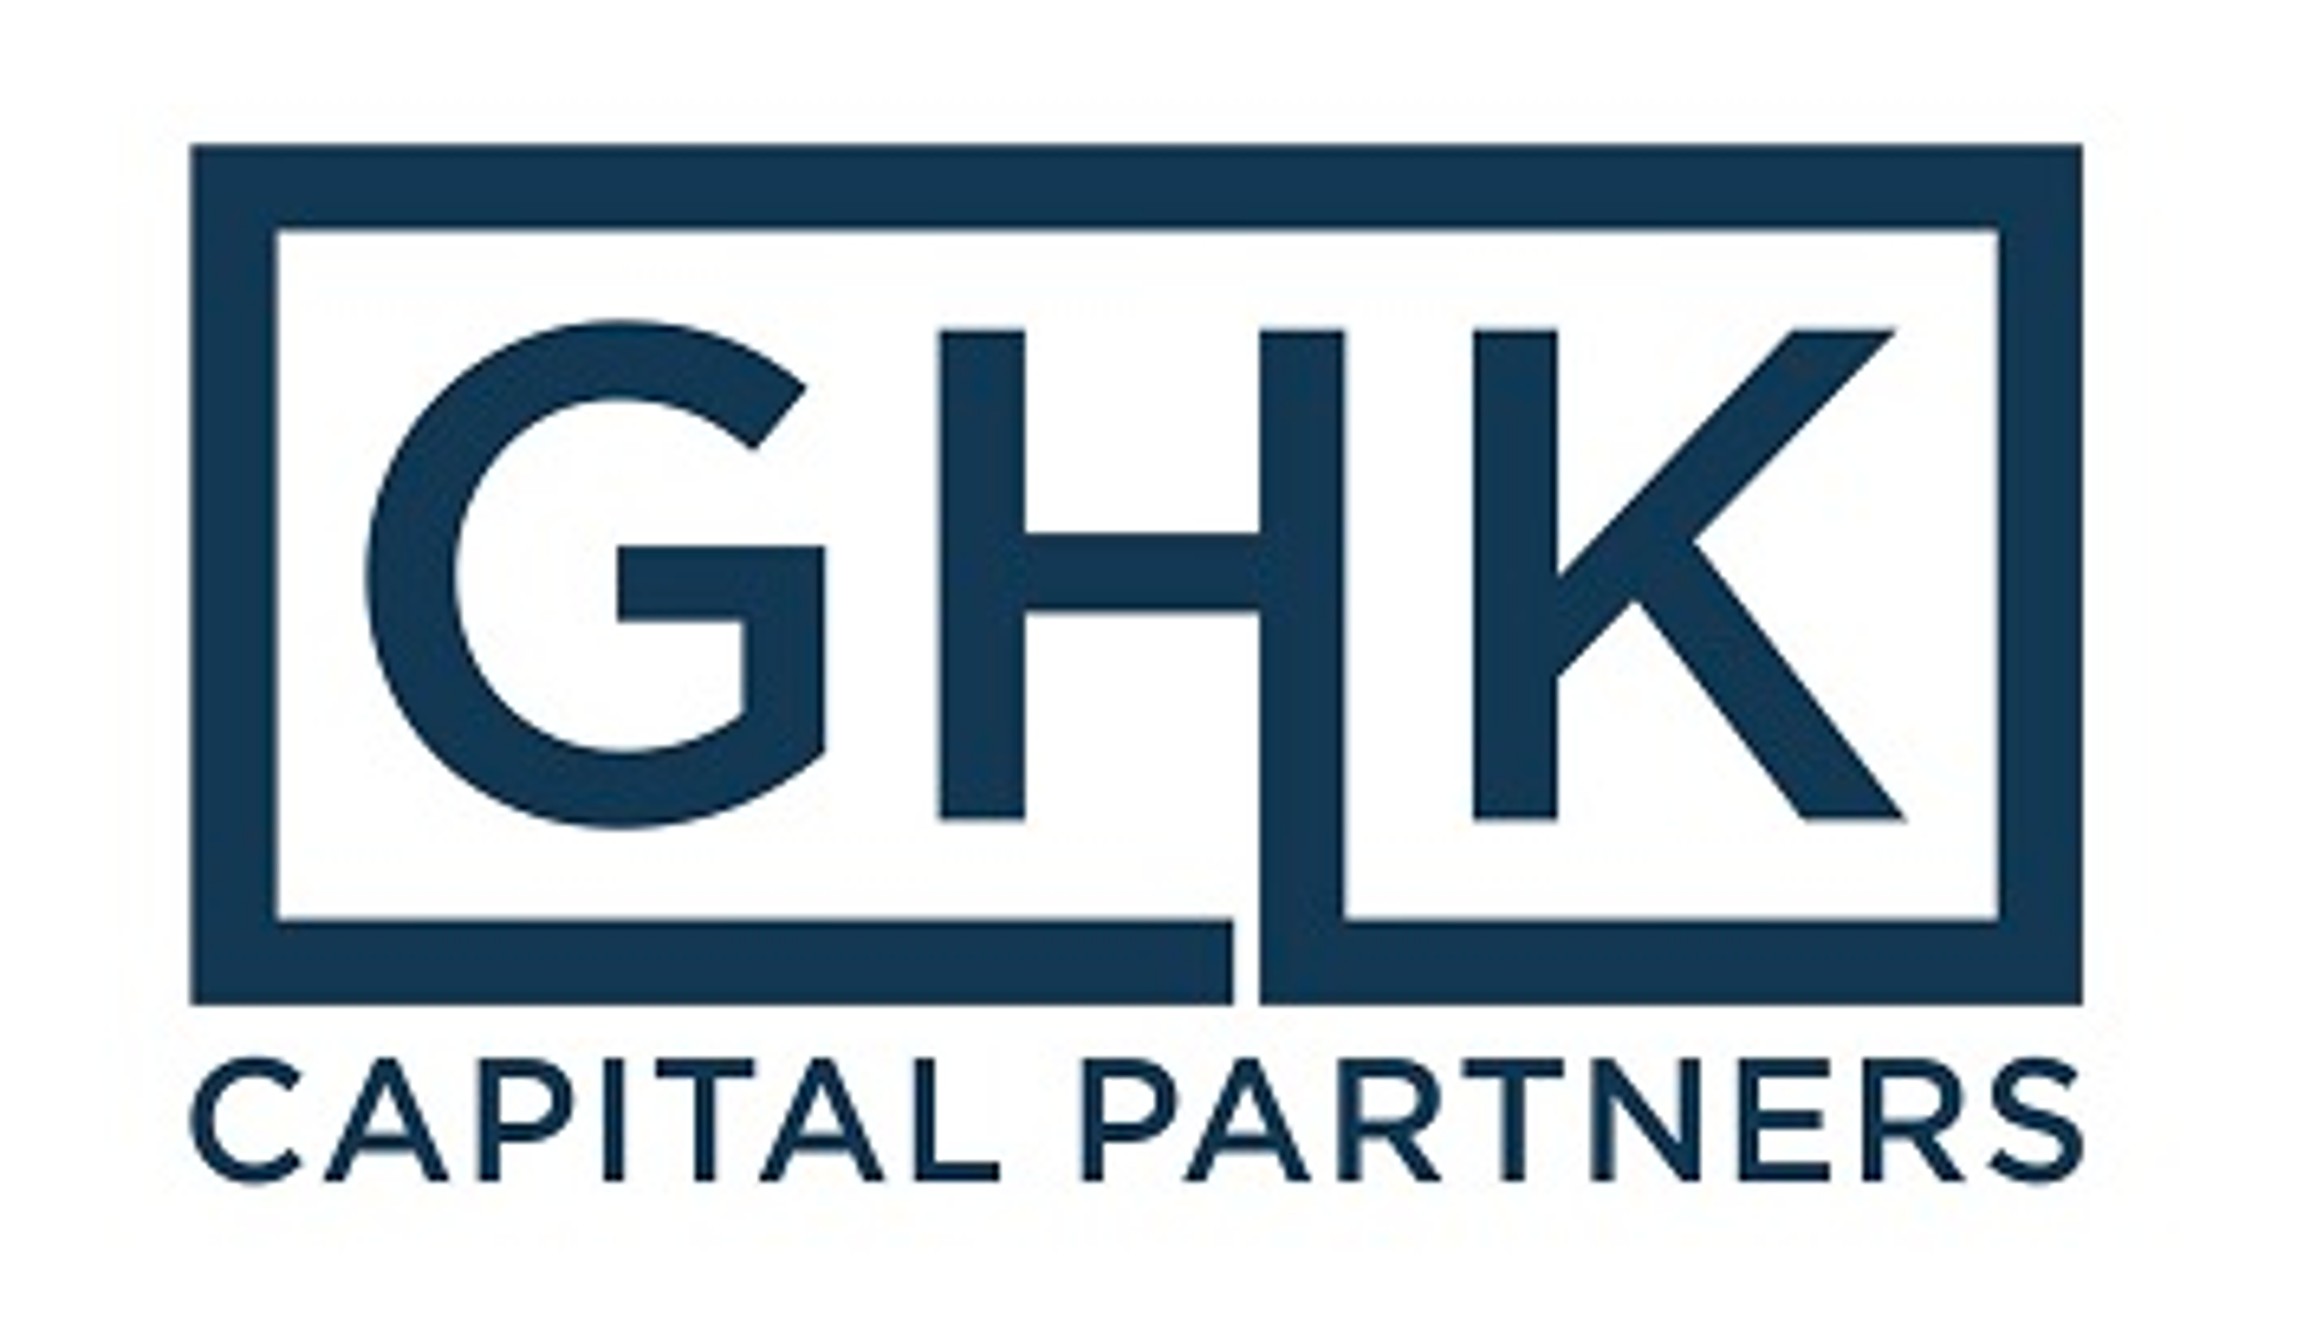 Ghk Capital Partners